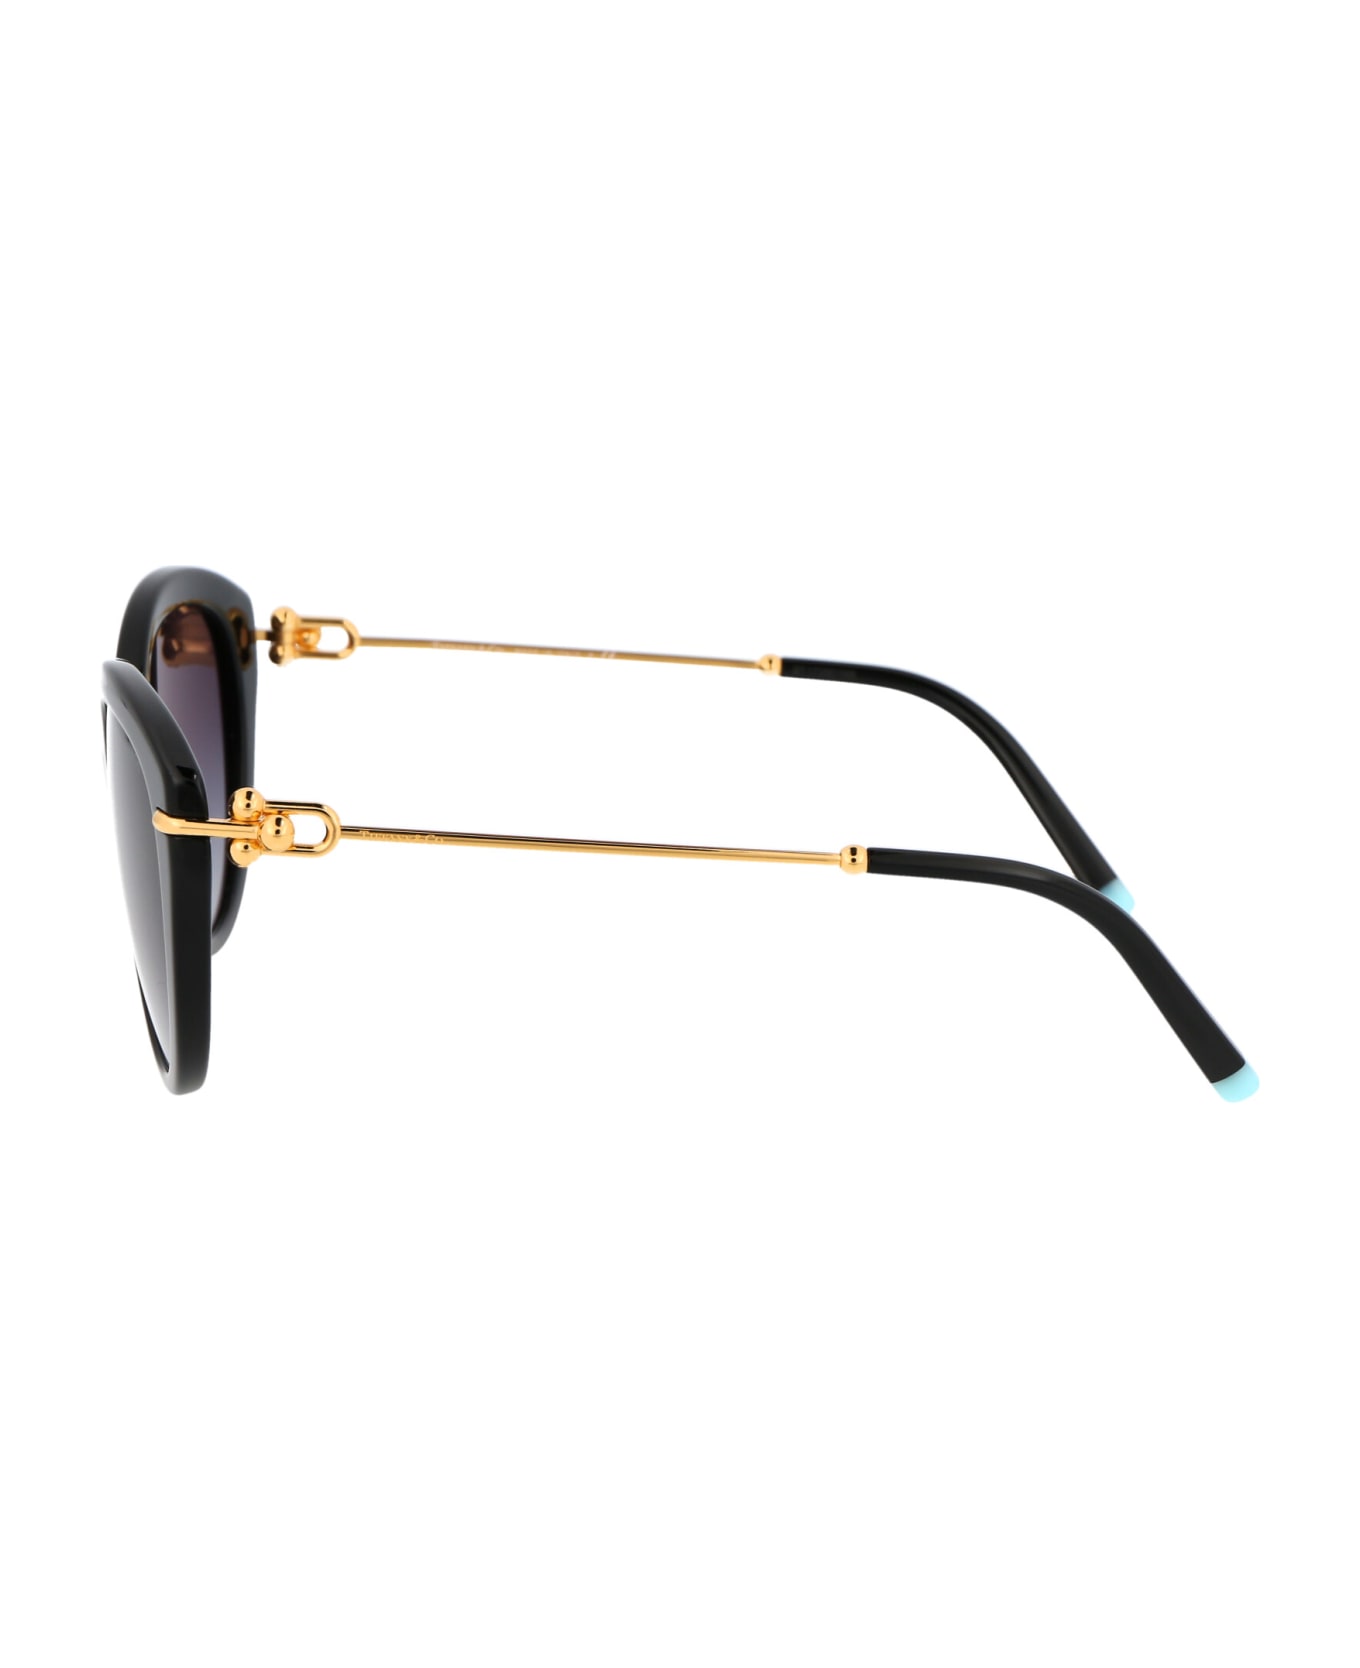 Tiffany & Co. 0tf4187 Sunglasses - 80013C Black